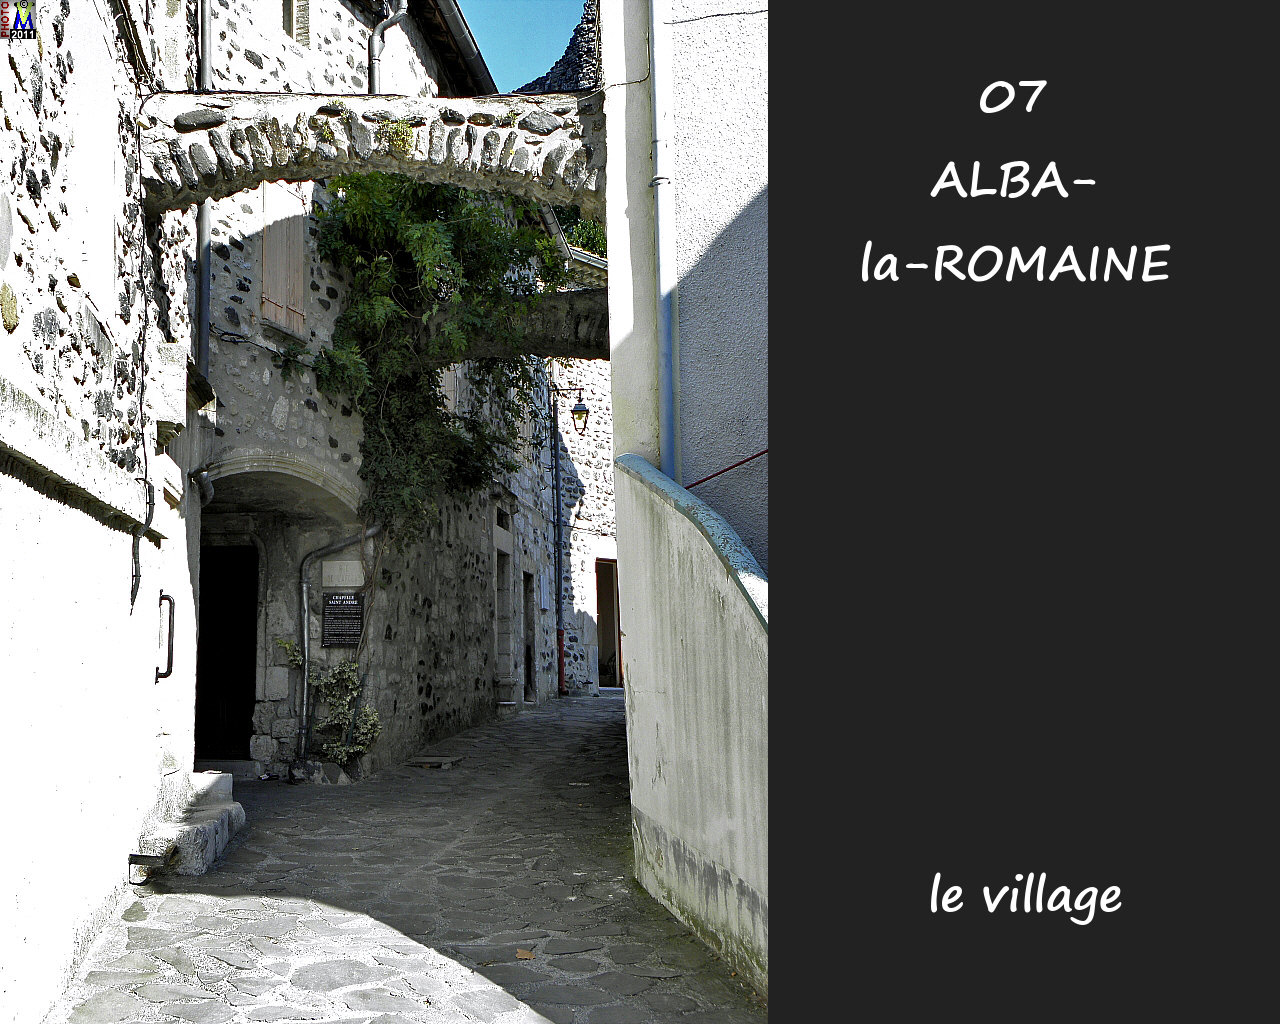 07ALBA-ROMAINE_village_118.jpg